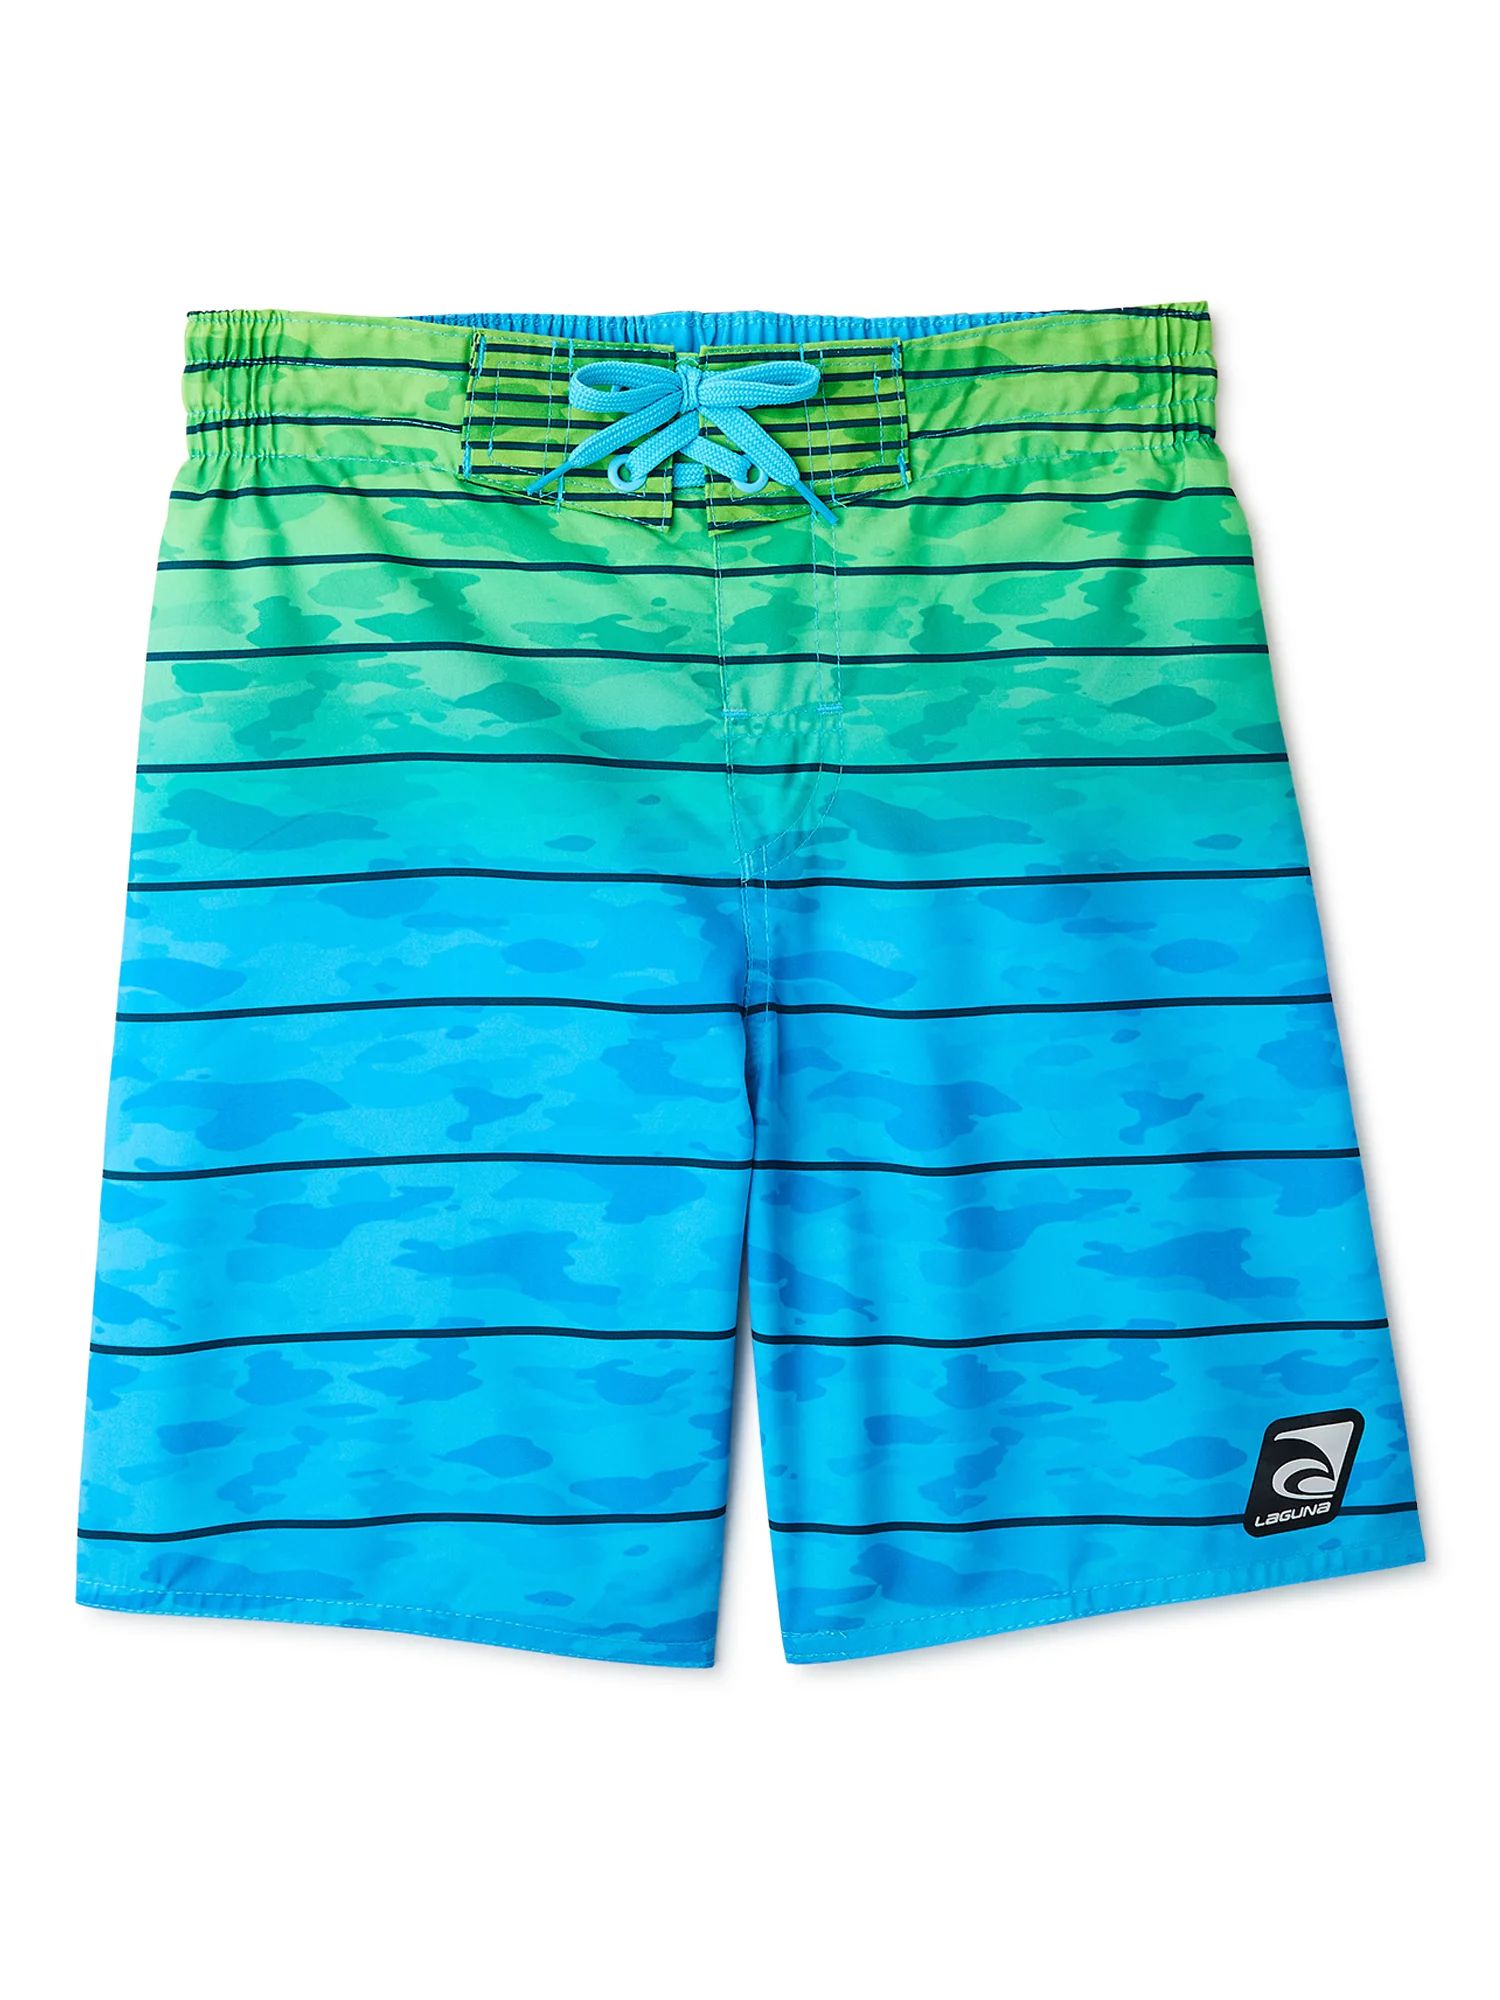 Laguna Boys Swim Trunks, Sizes 8-20 | Walmart (US)